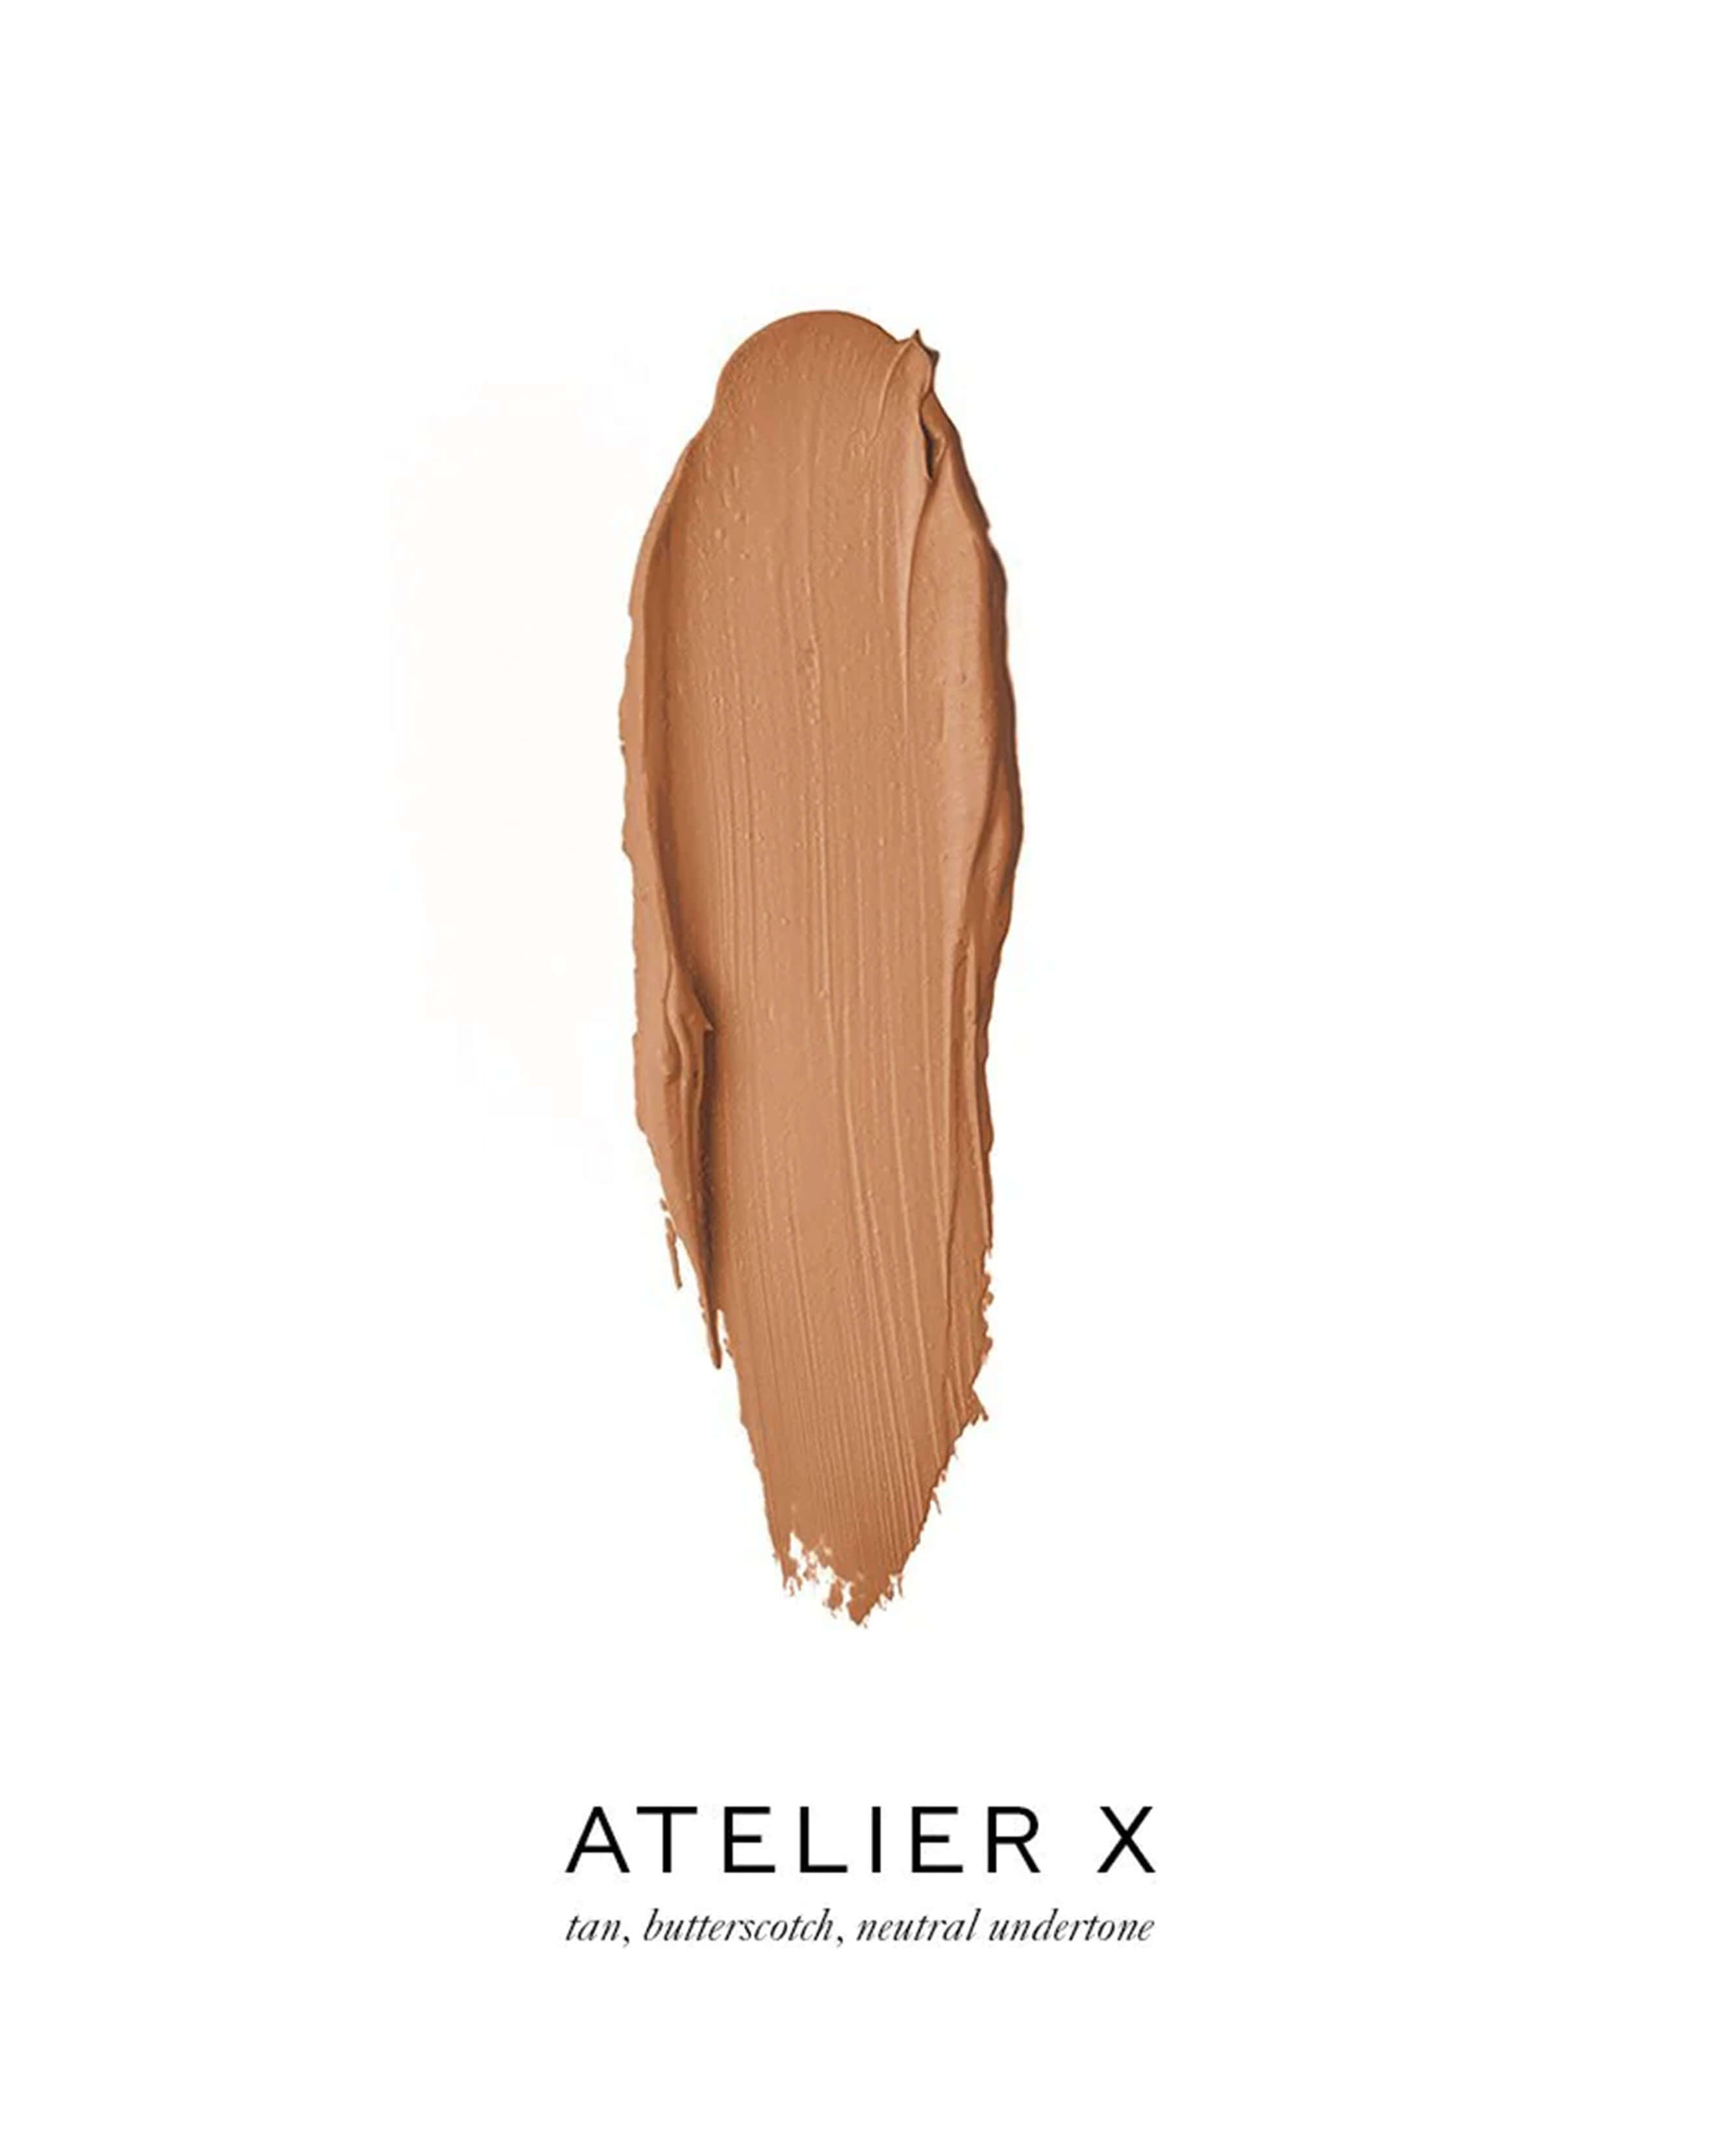 Atelier X (tan butterscotch, neutral undertone)